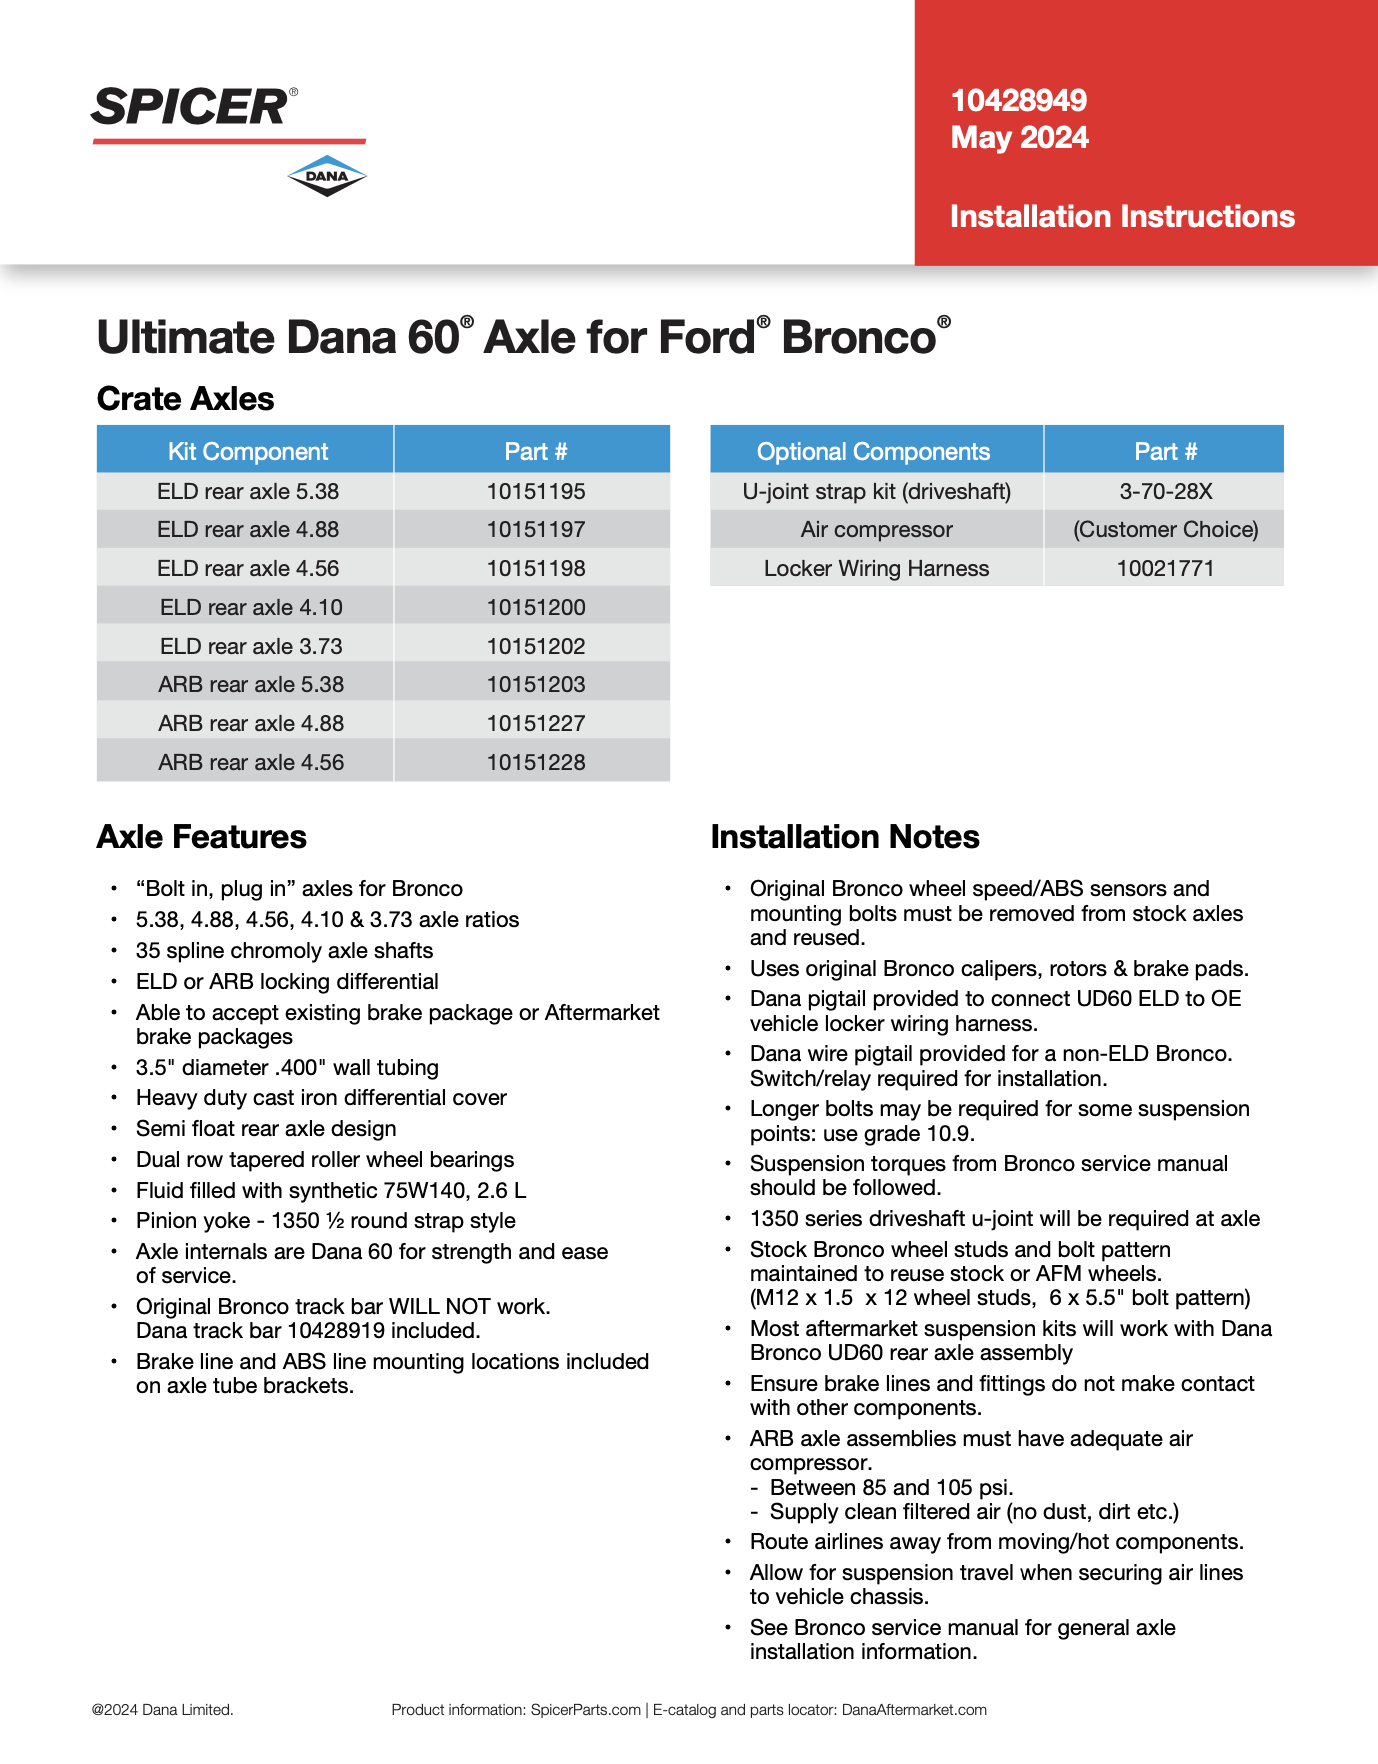 UD60 Bronco Installation Instructions